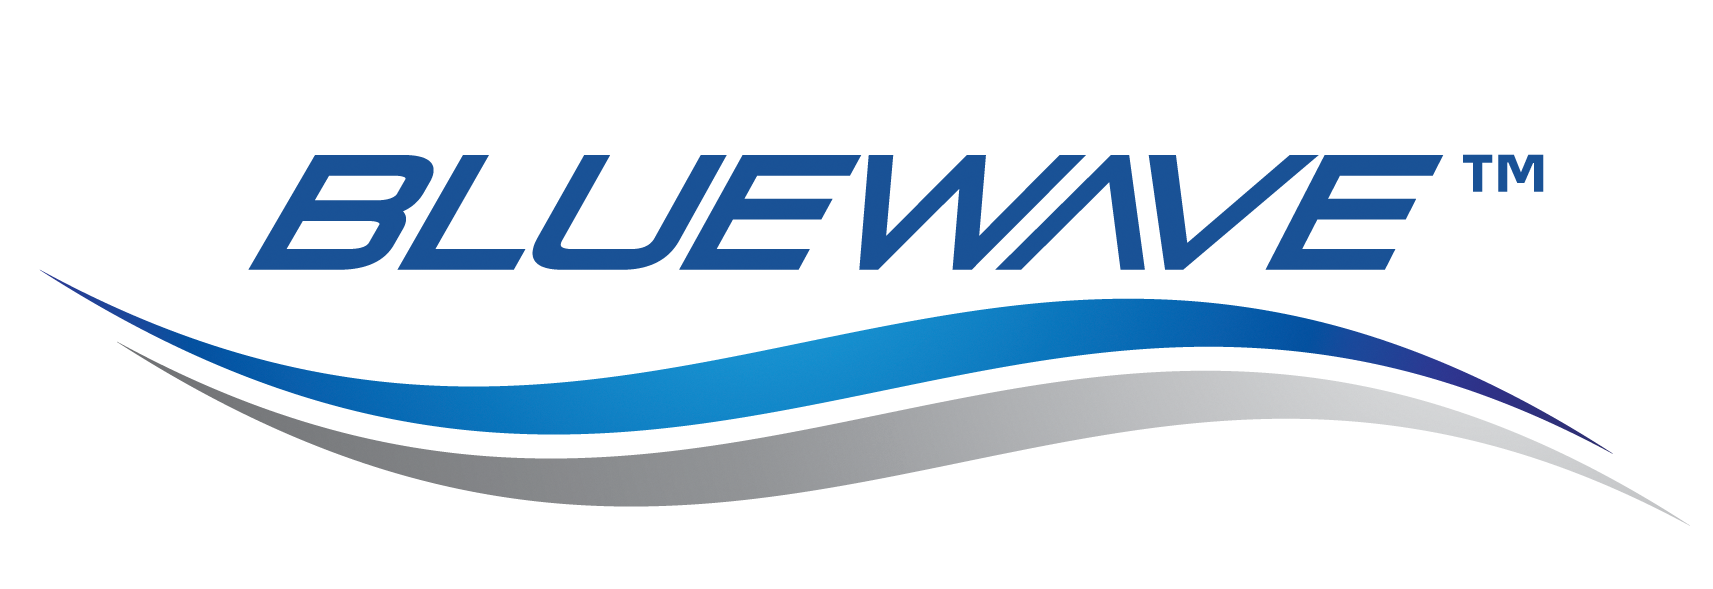 Bluewave image